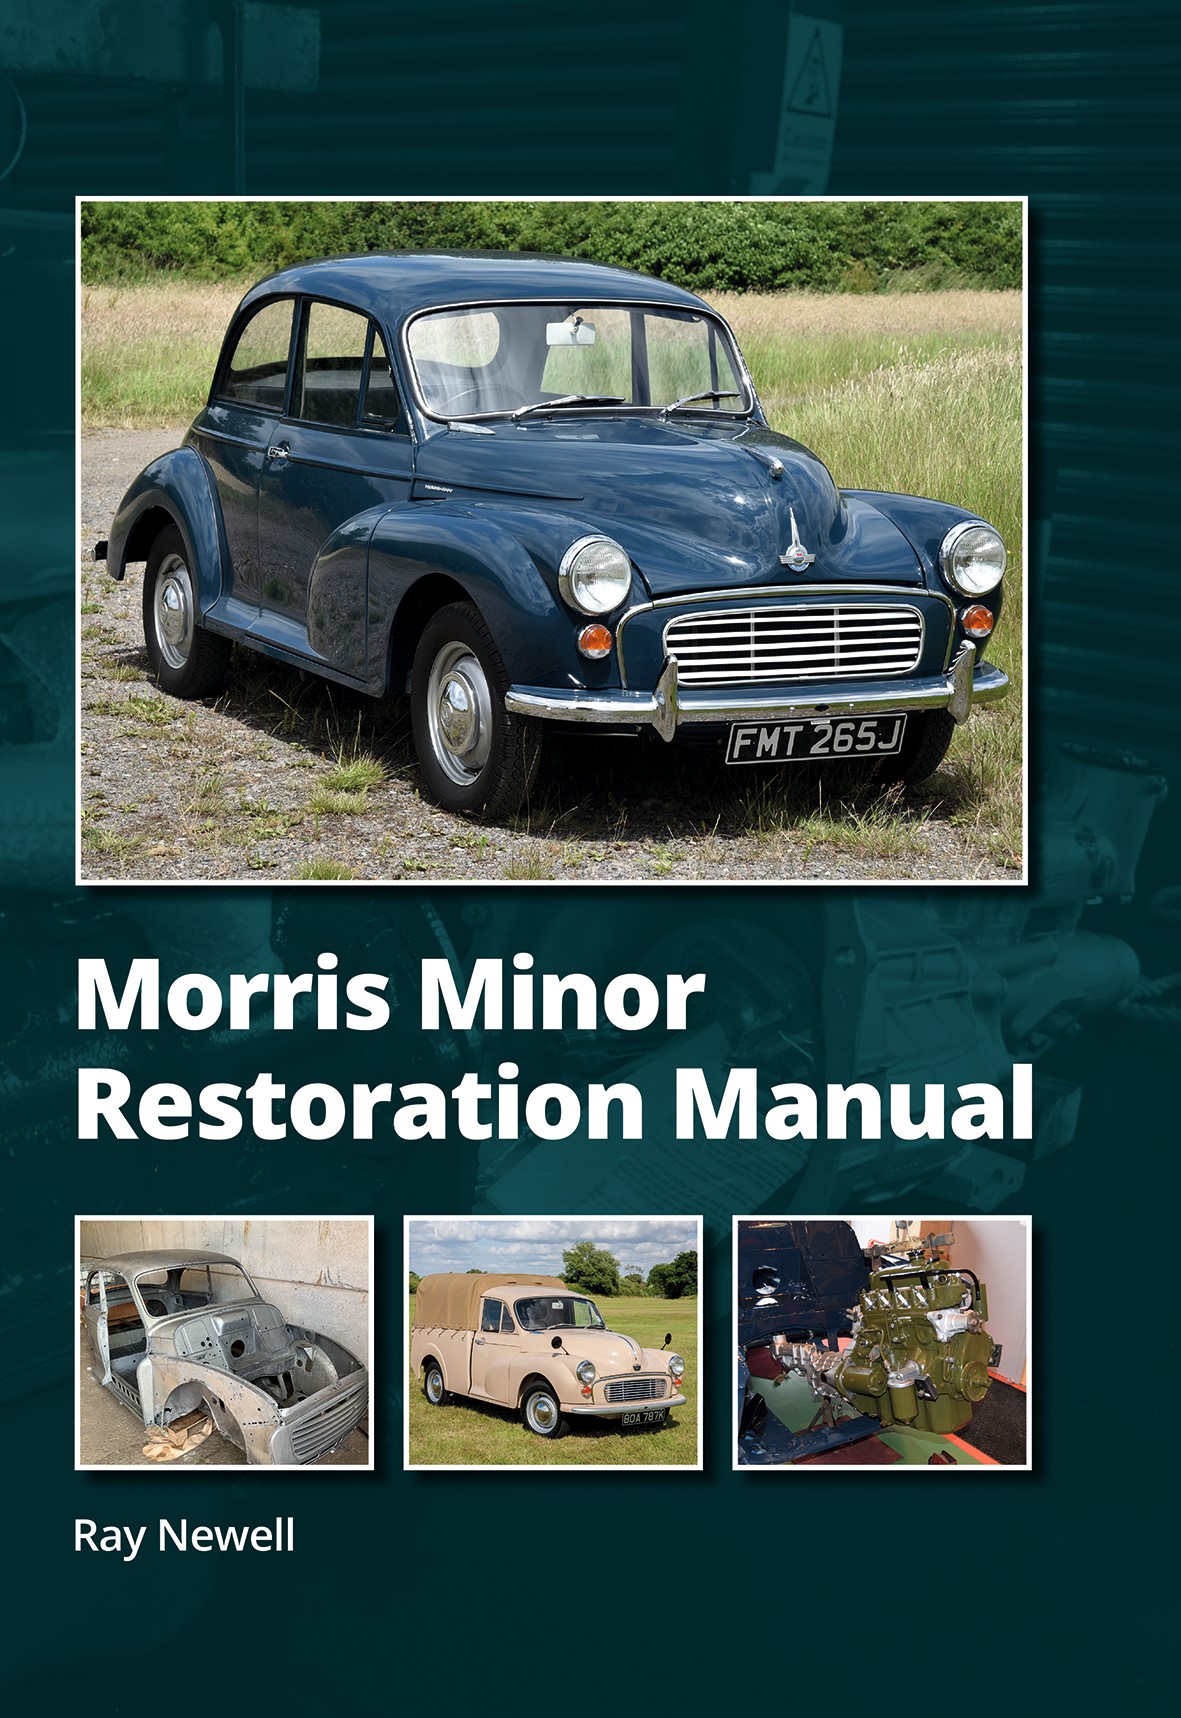 Morris Minor Restoration by Ray Newell